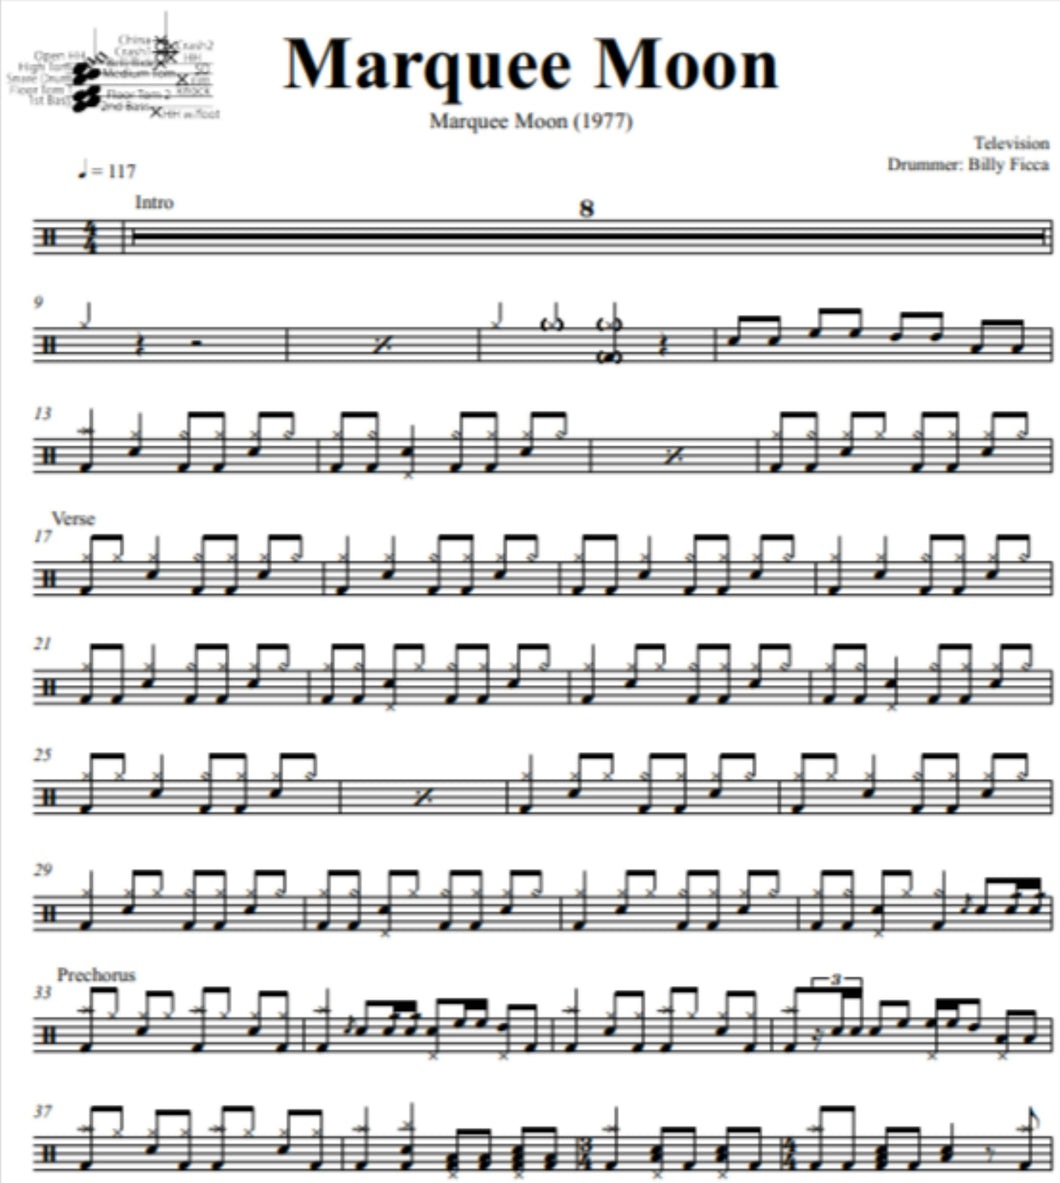 Marquee Moon - Television - Full Drum Transcription / Drum Sheet Music - DrumSetSheetMusic.com